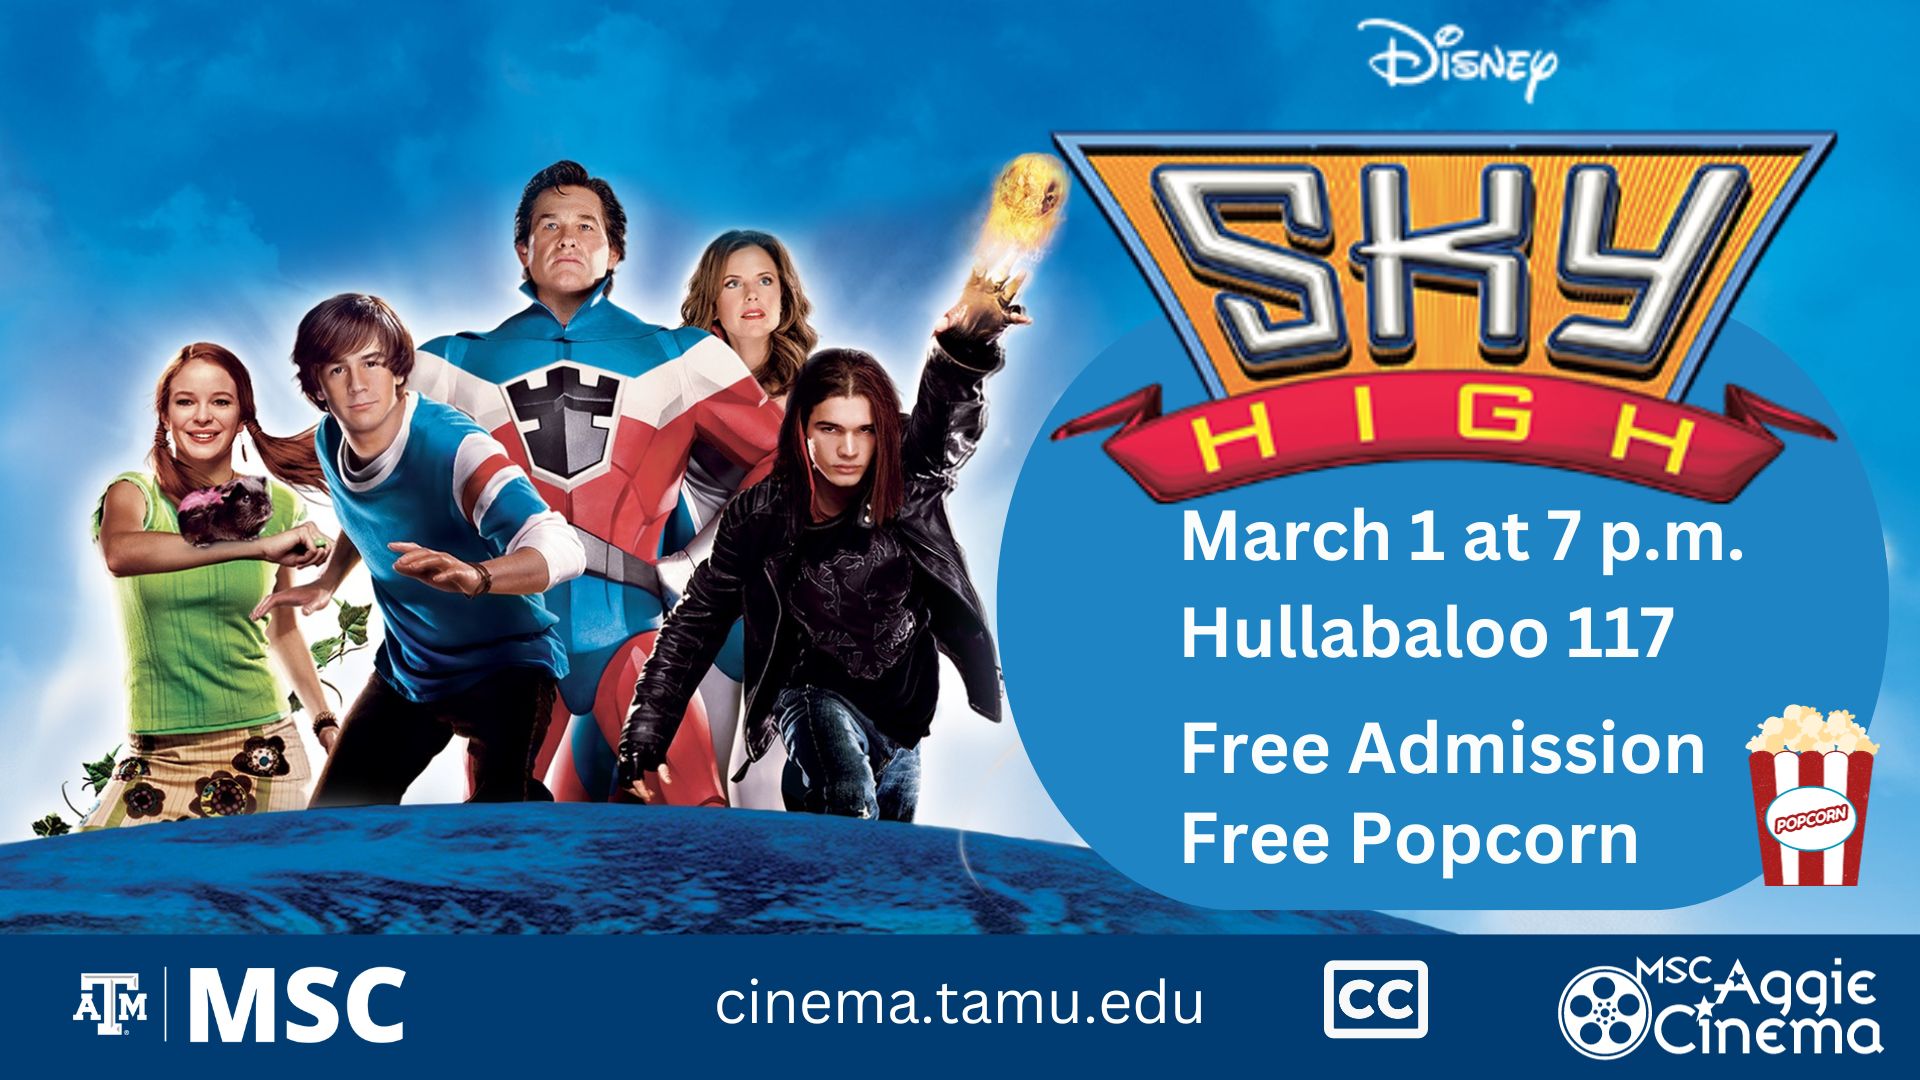 MSC Aggie Cinema presents Sky High, March 1 at 7 p.m. at Hullabaloo 117, Free Admission, Free Popcorn website: cinema.tamu.edu